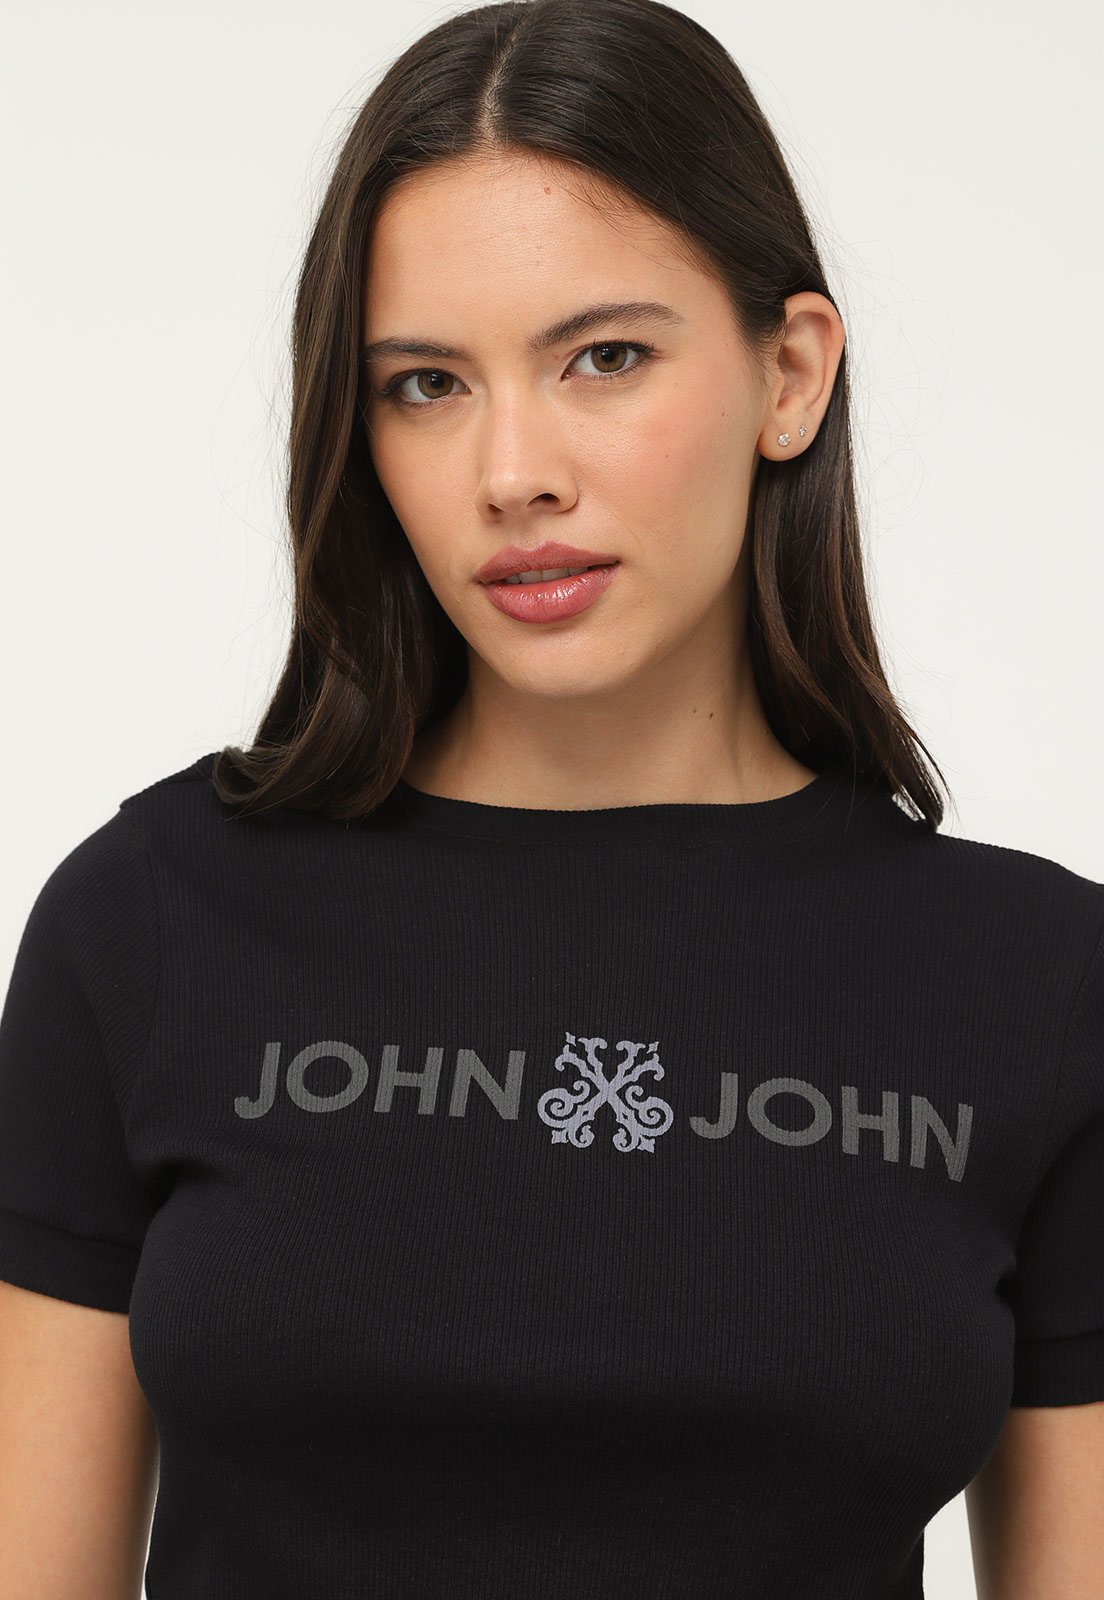 Camiseta John John Feminina - Preto